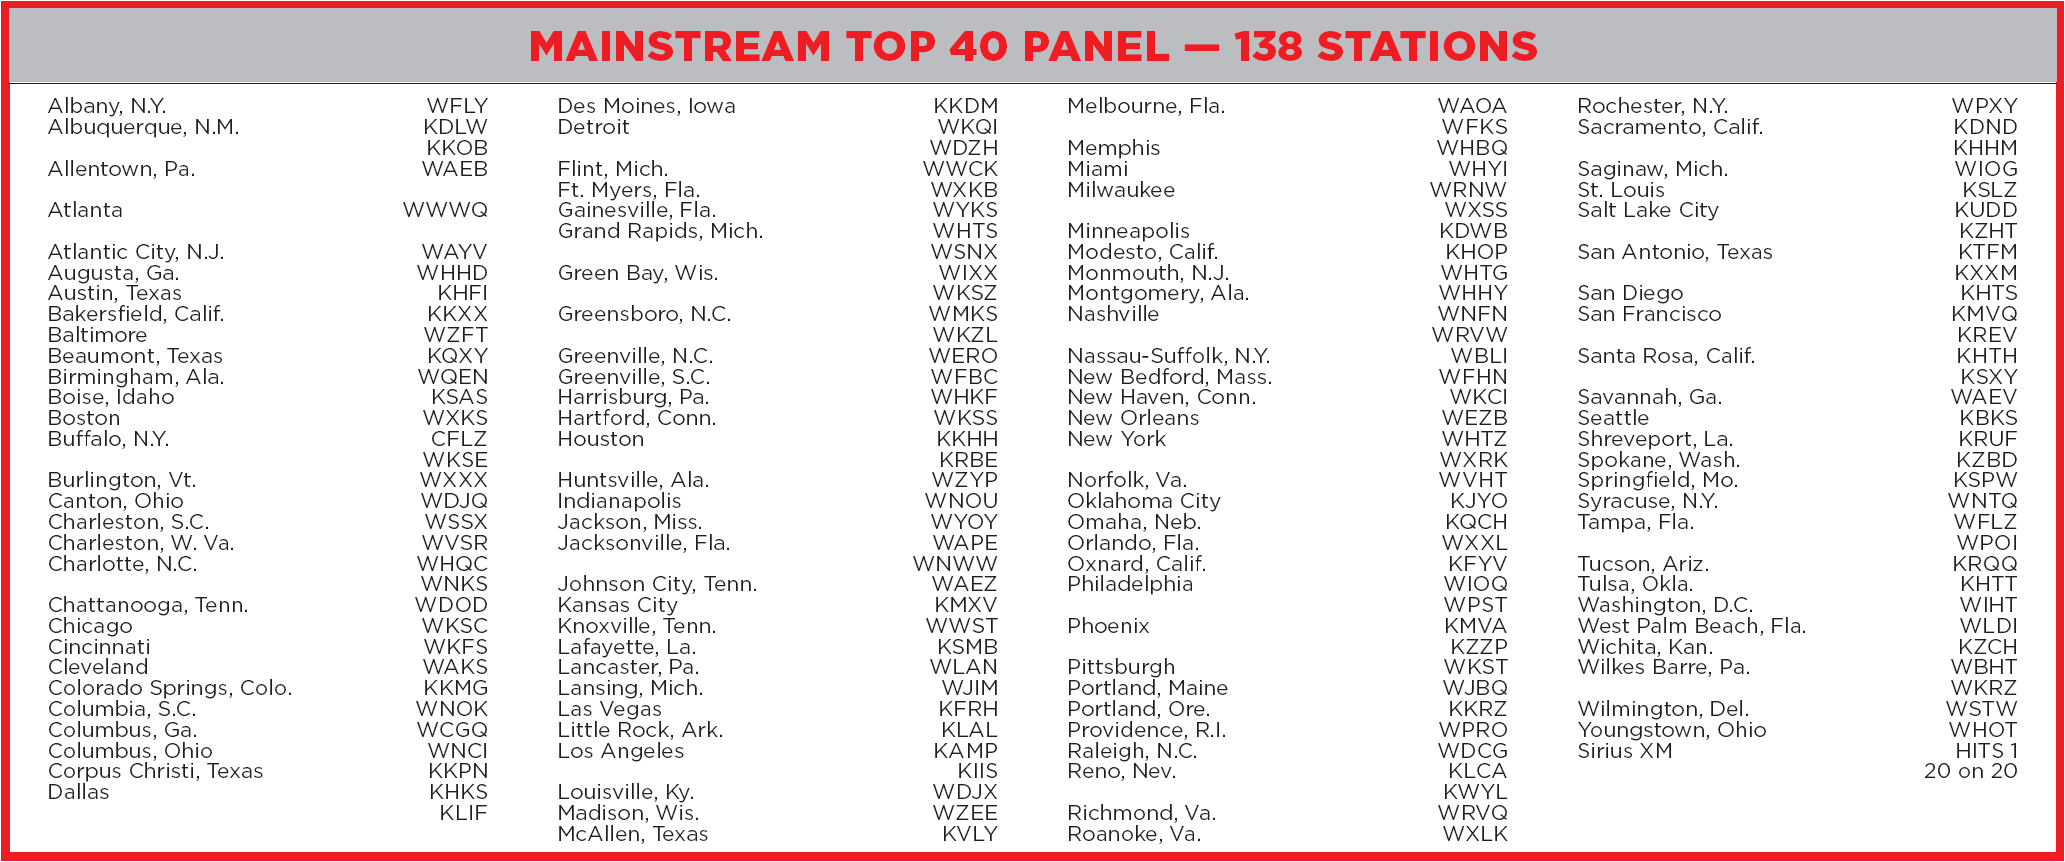 CHR/Top 40，參與貢獻榜單的電台數量138家